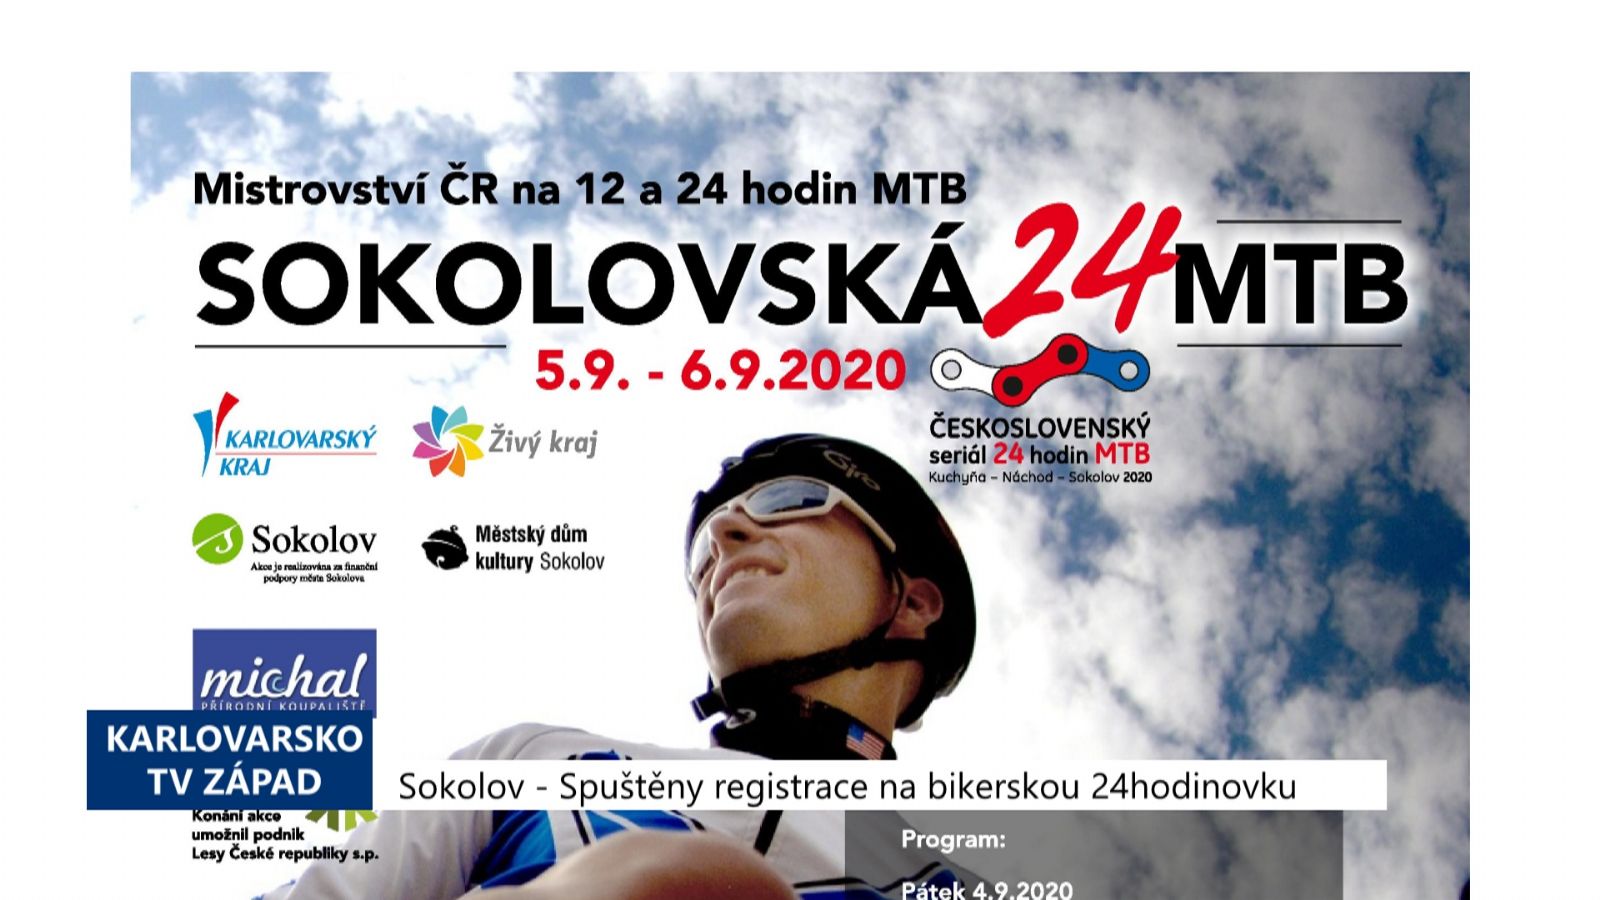 Sokolov: Spuštěny registrace na bikerskou 24hodinovku (TV Západ)